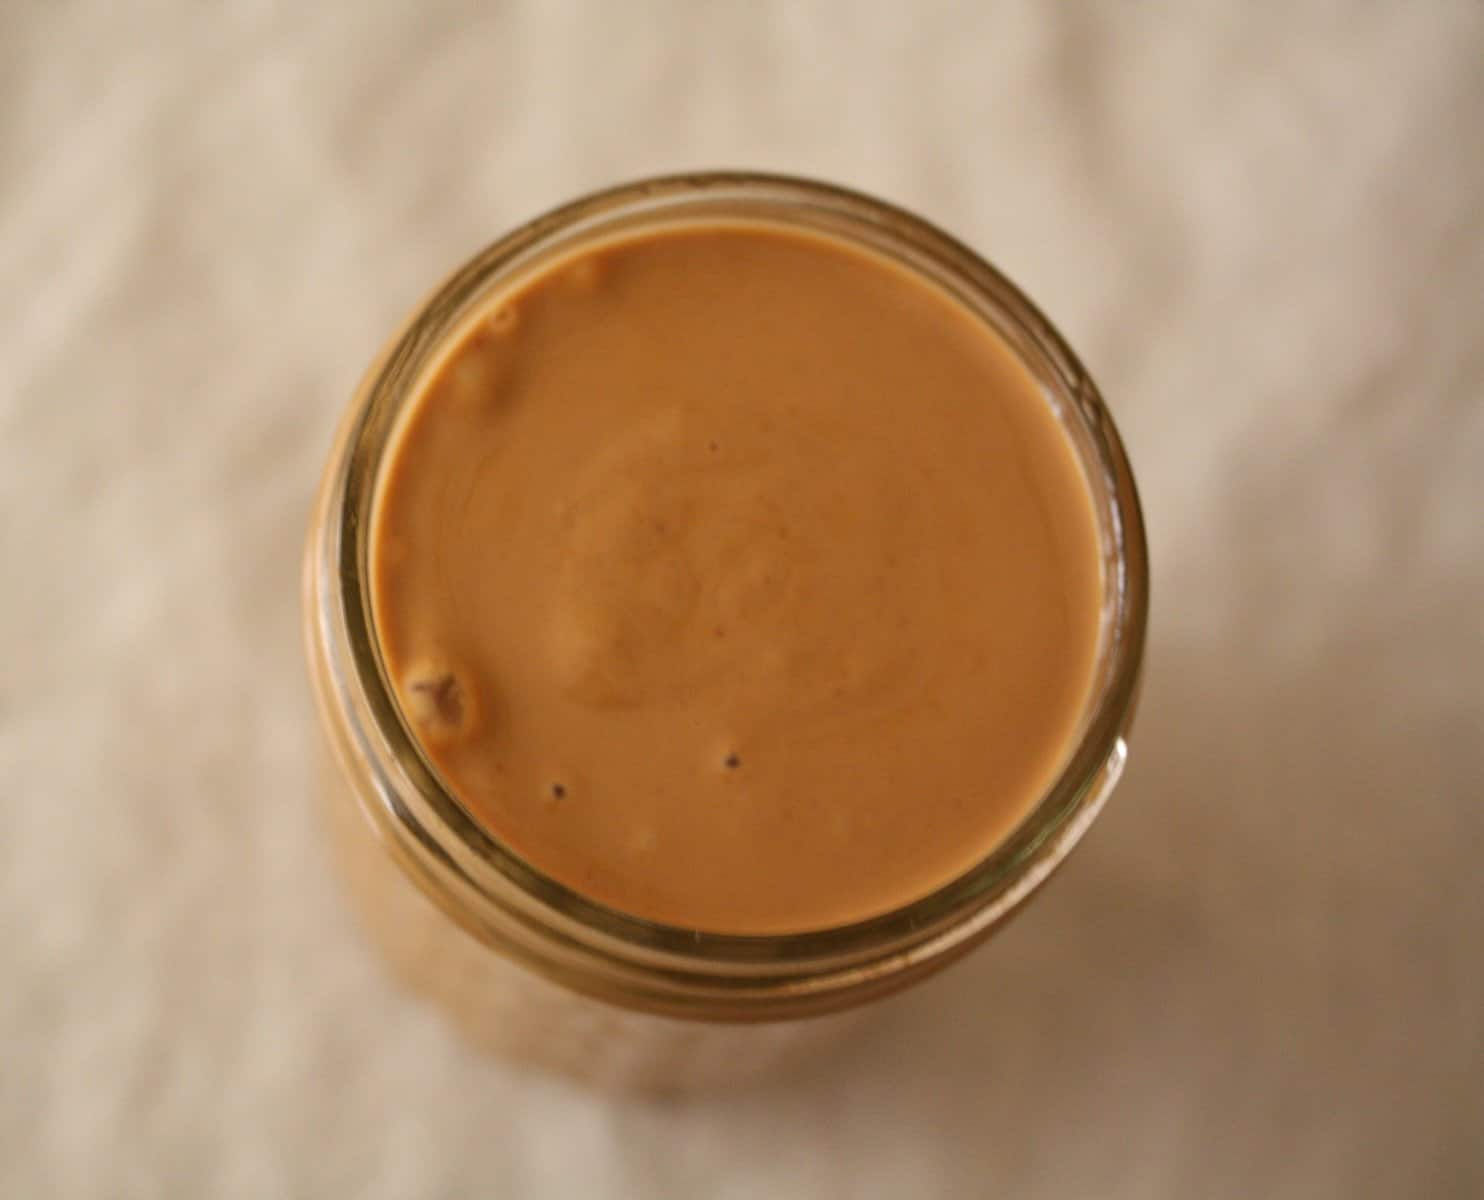 A jar of peanut sauce.